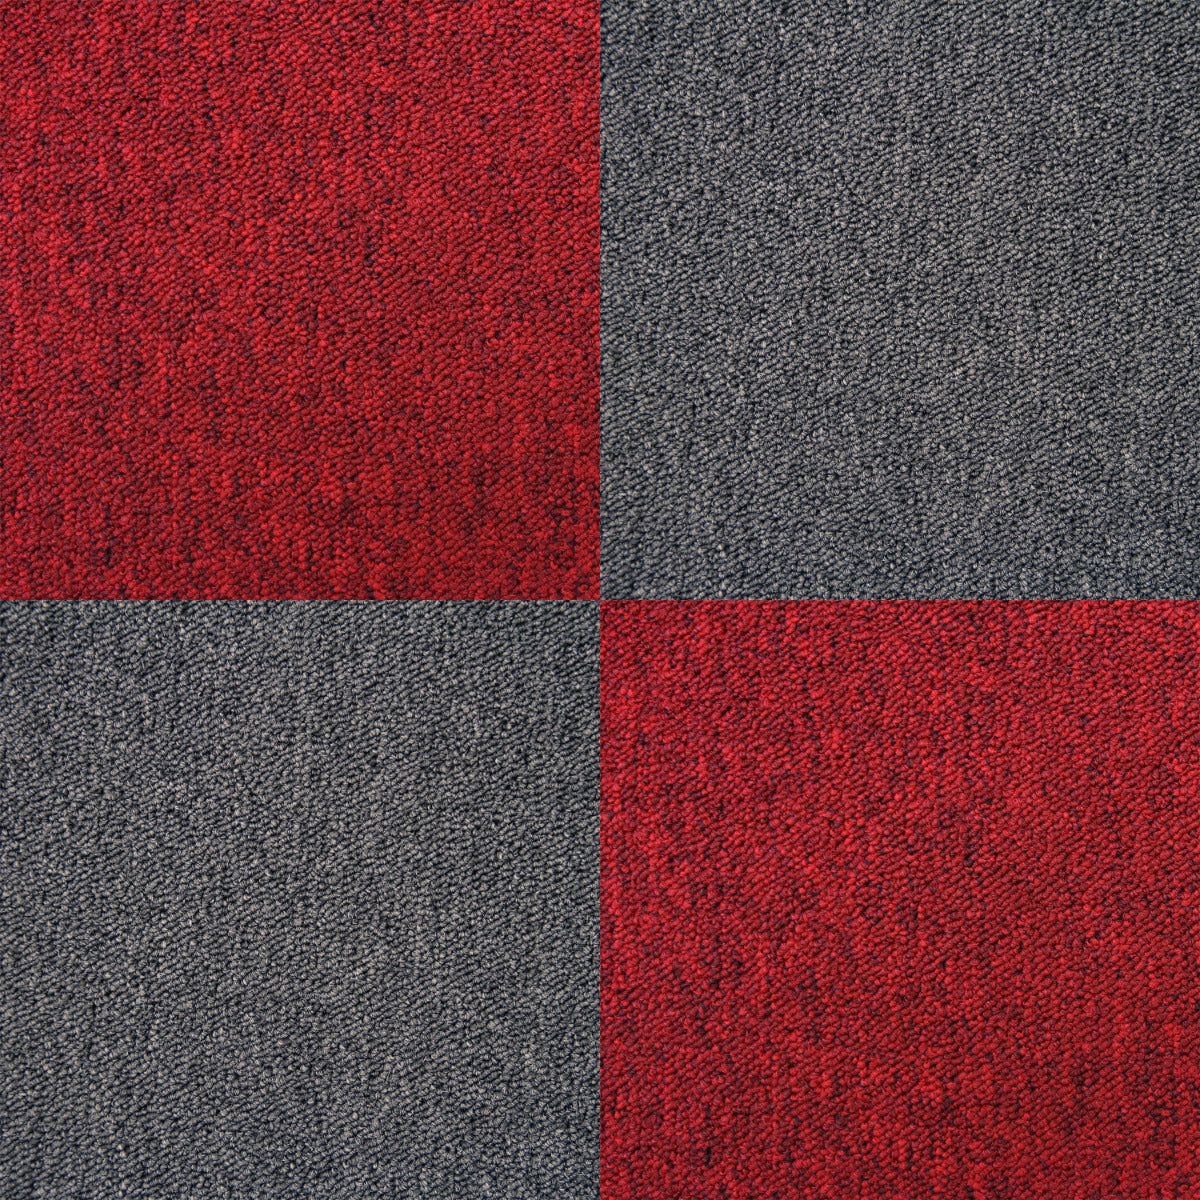 40 x Carpet Tiles 10m2 / Scarlet Red & Charcoal Black